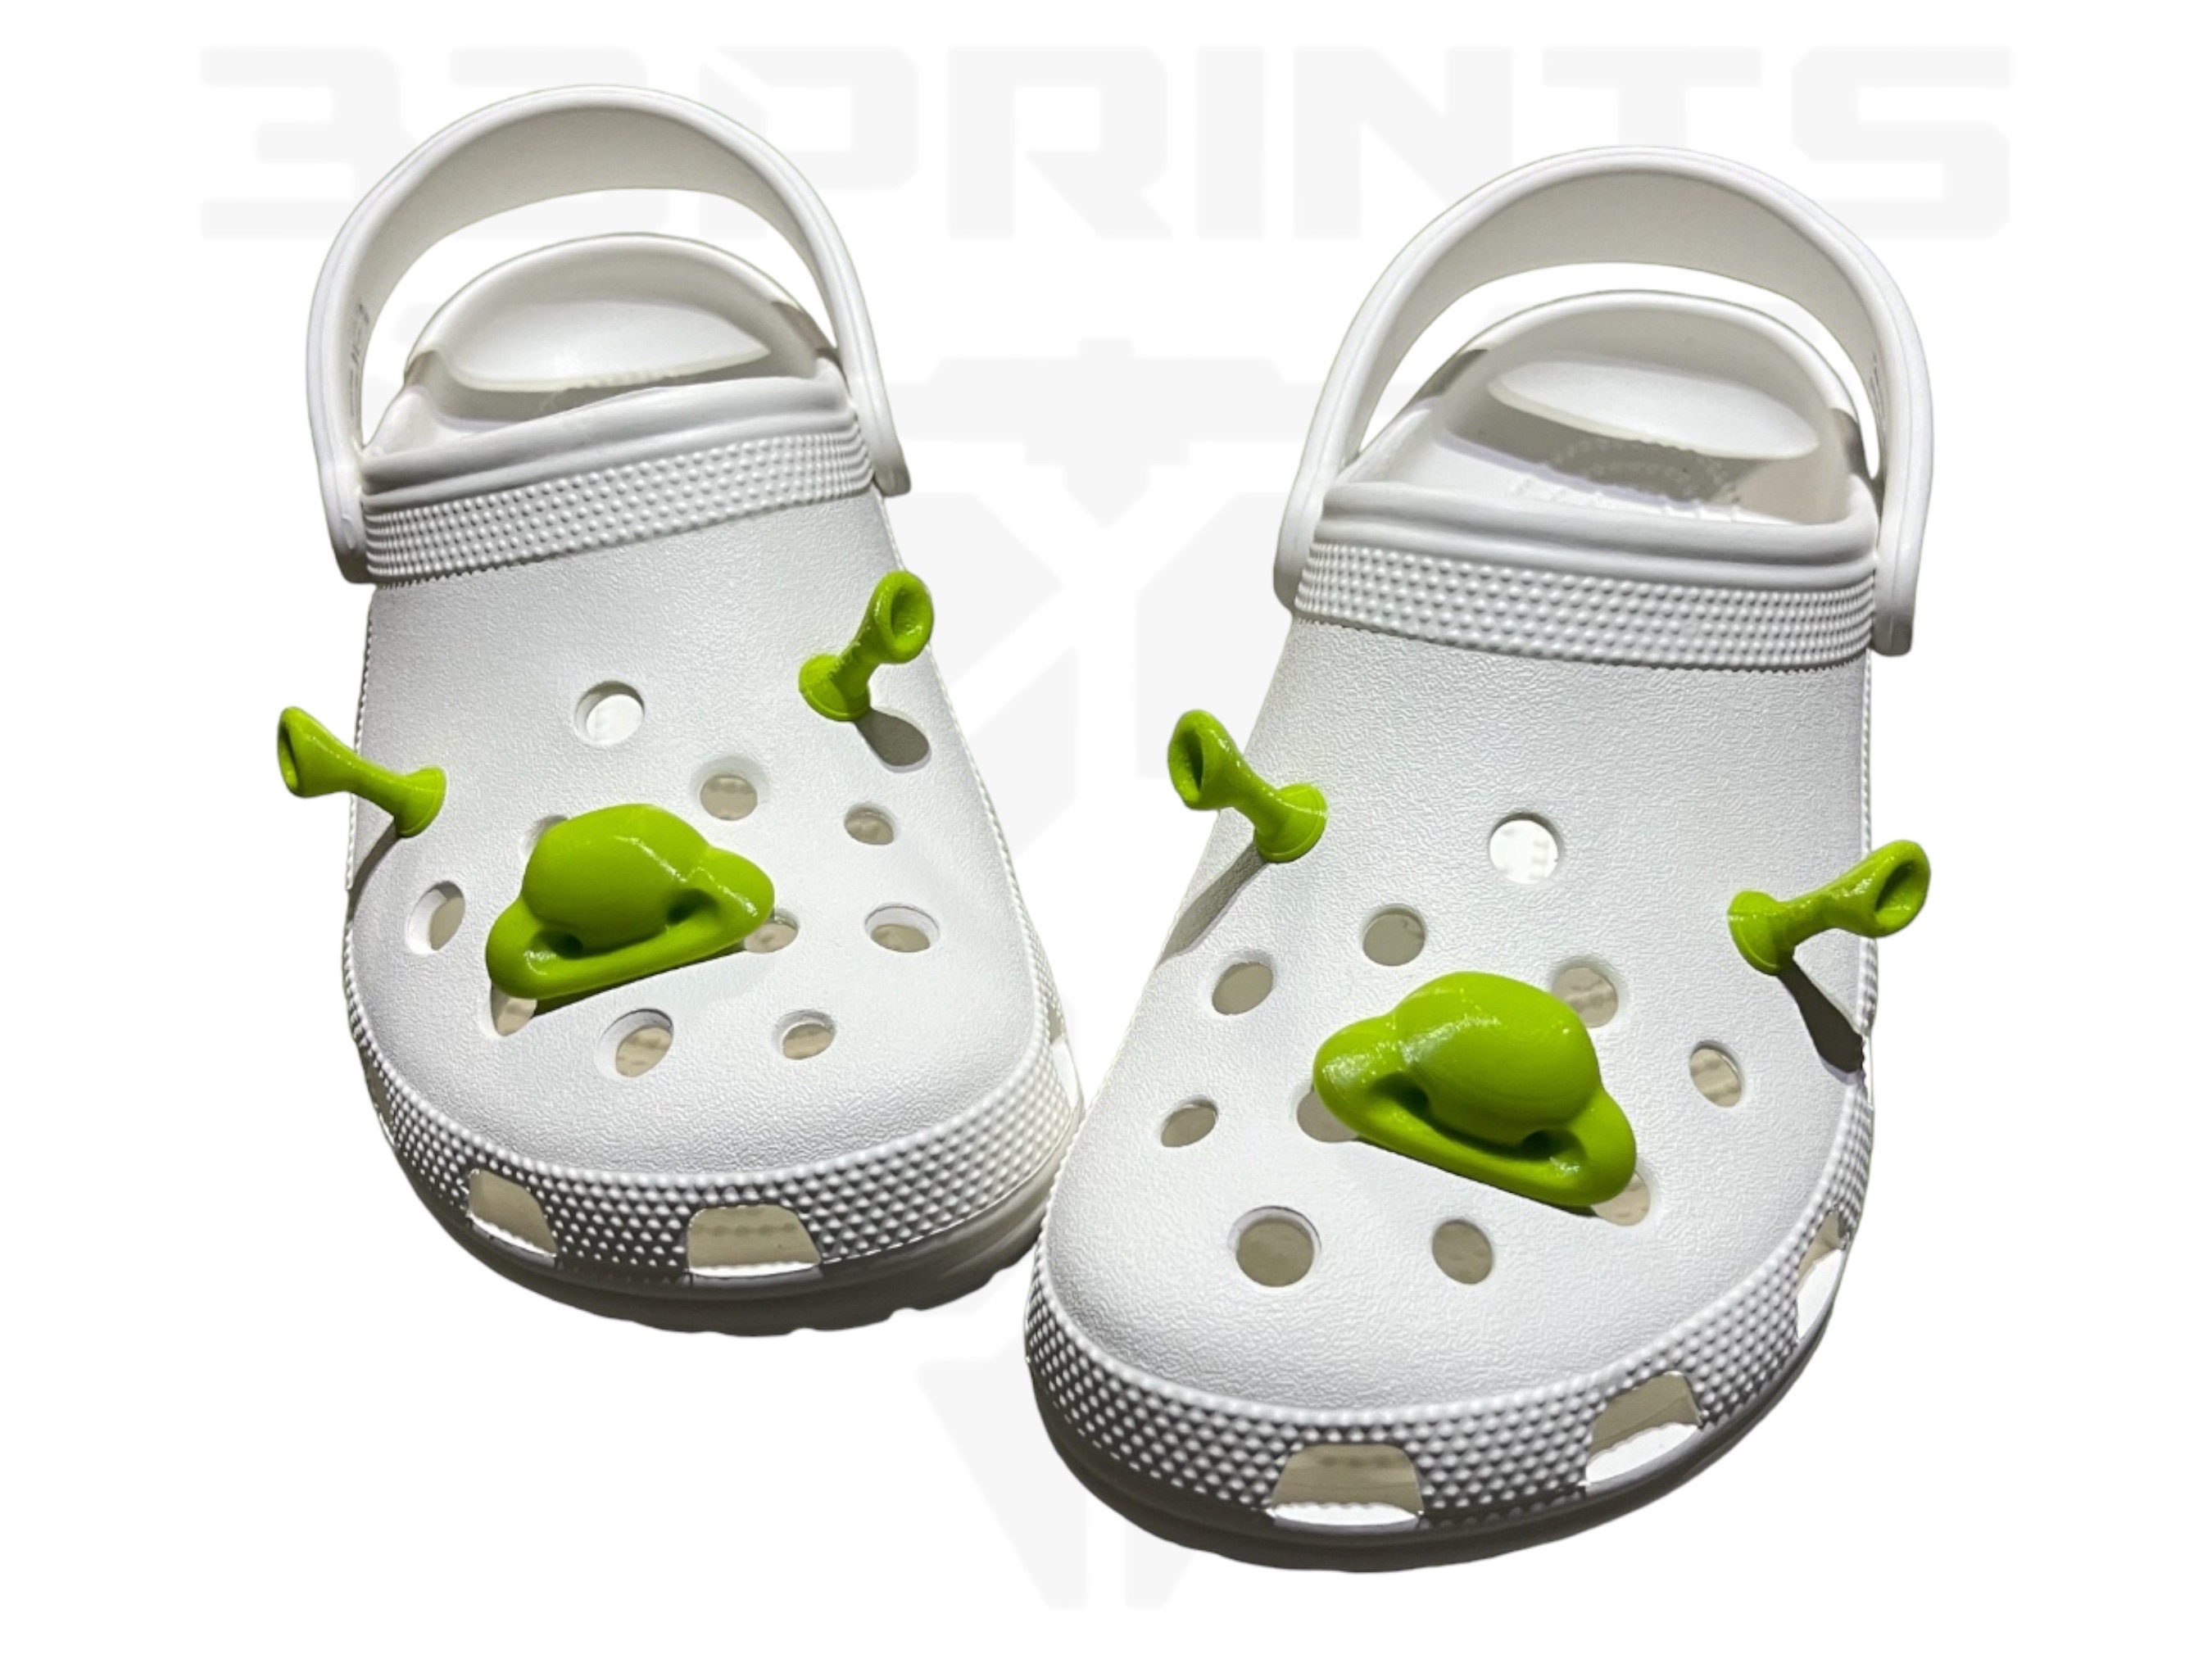 The Original Ogre Ears Croc Charms, Croc Ears, Croc Jibbitz, Shrek Ears Croc Charms, Shrek Crocs, Shrocks